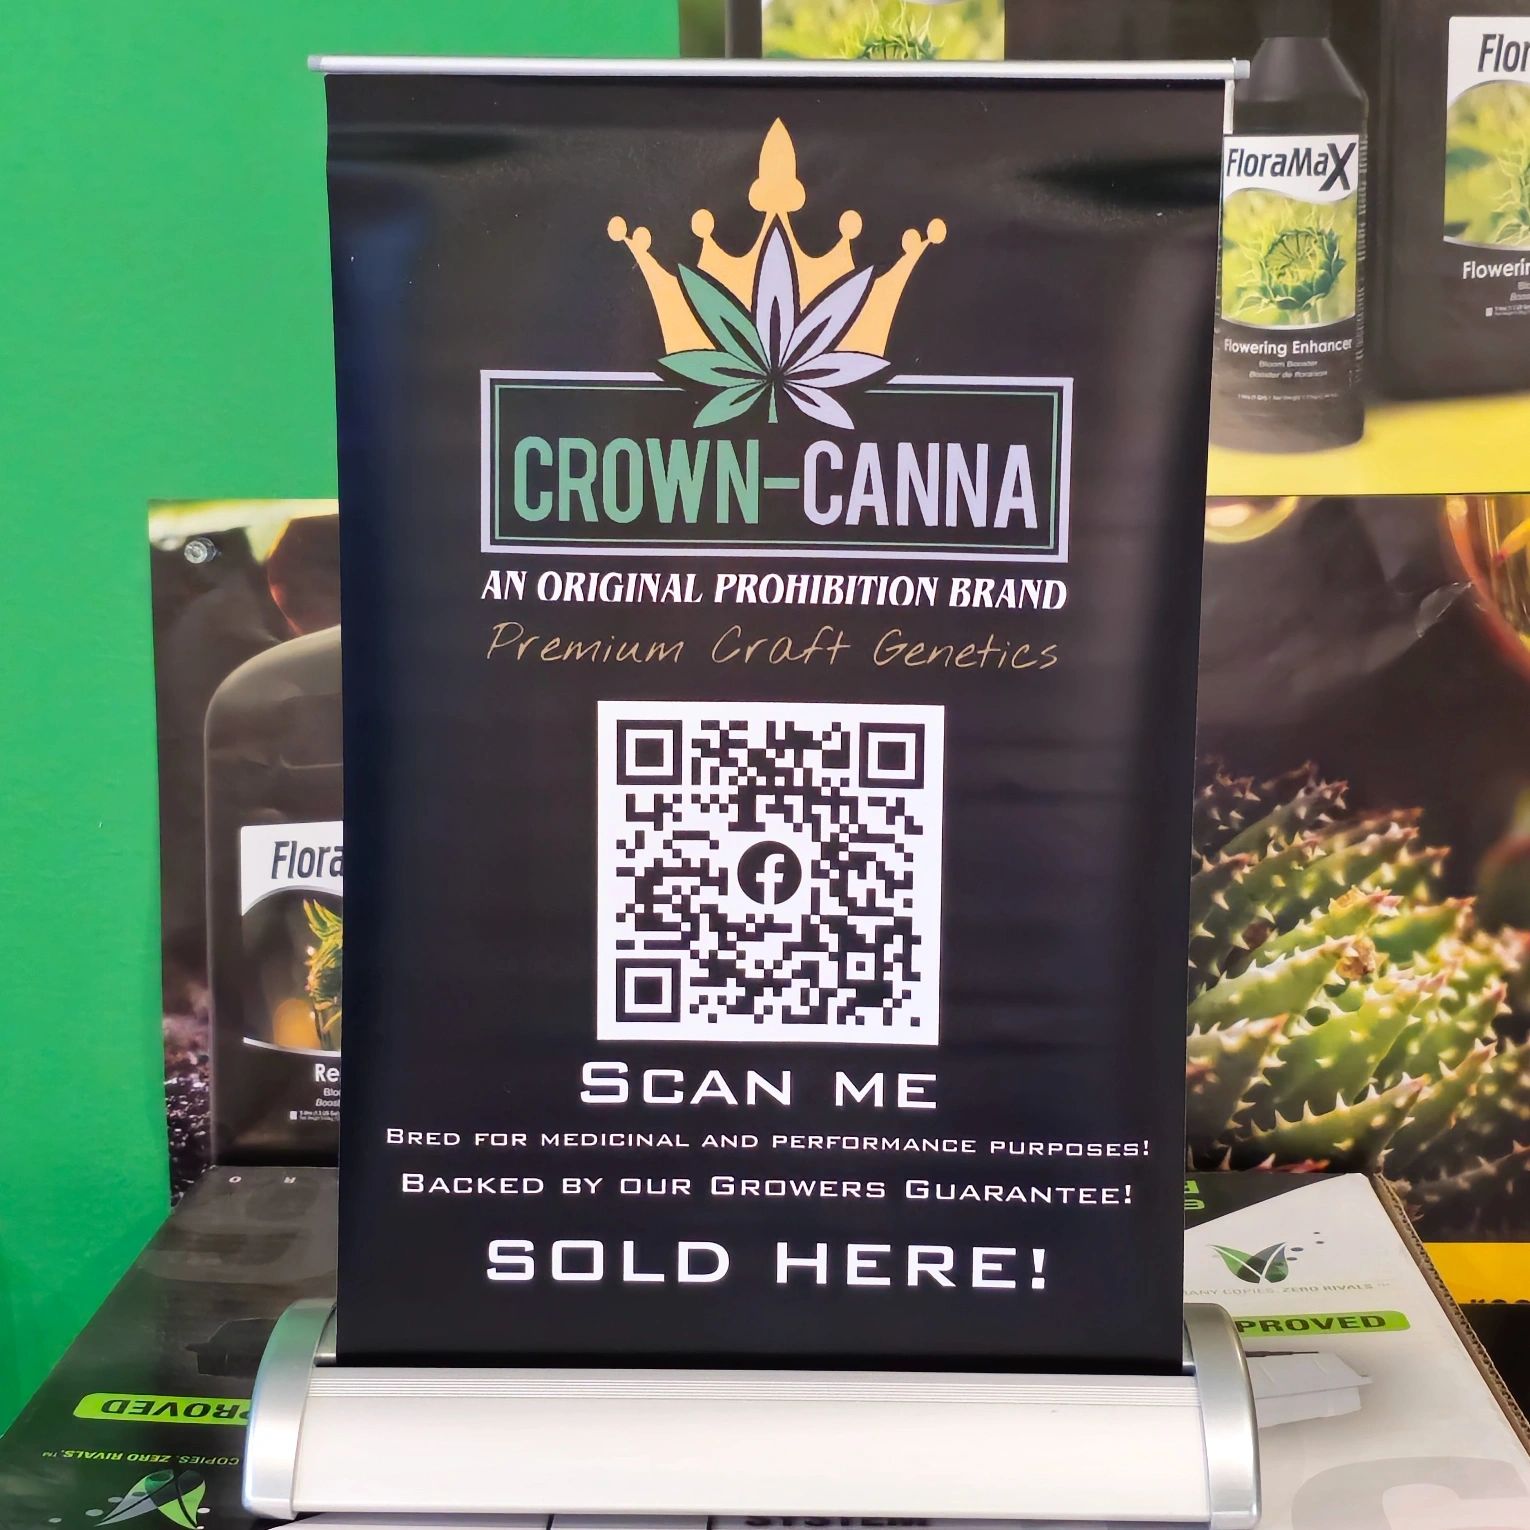 Crown-Canna Premium Craft Genetics